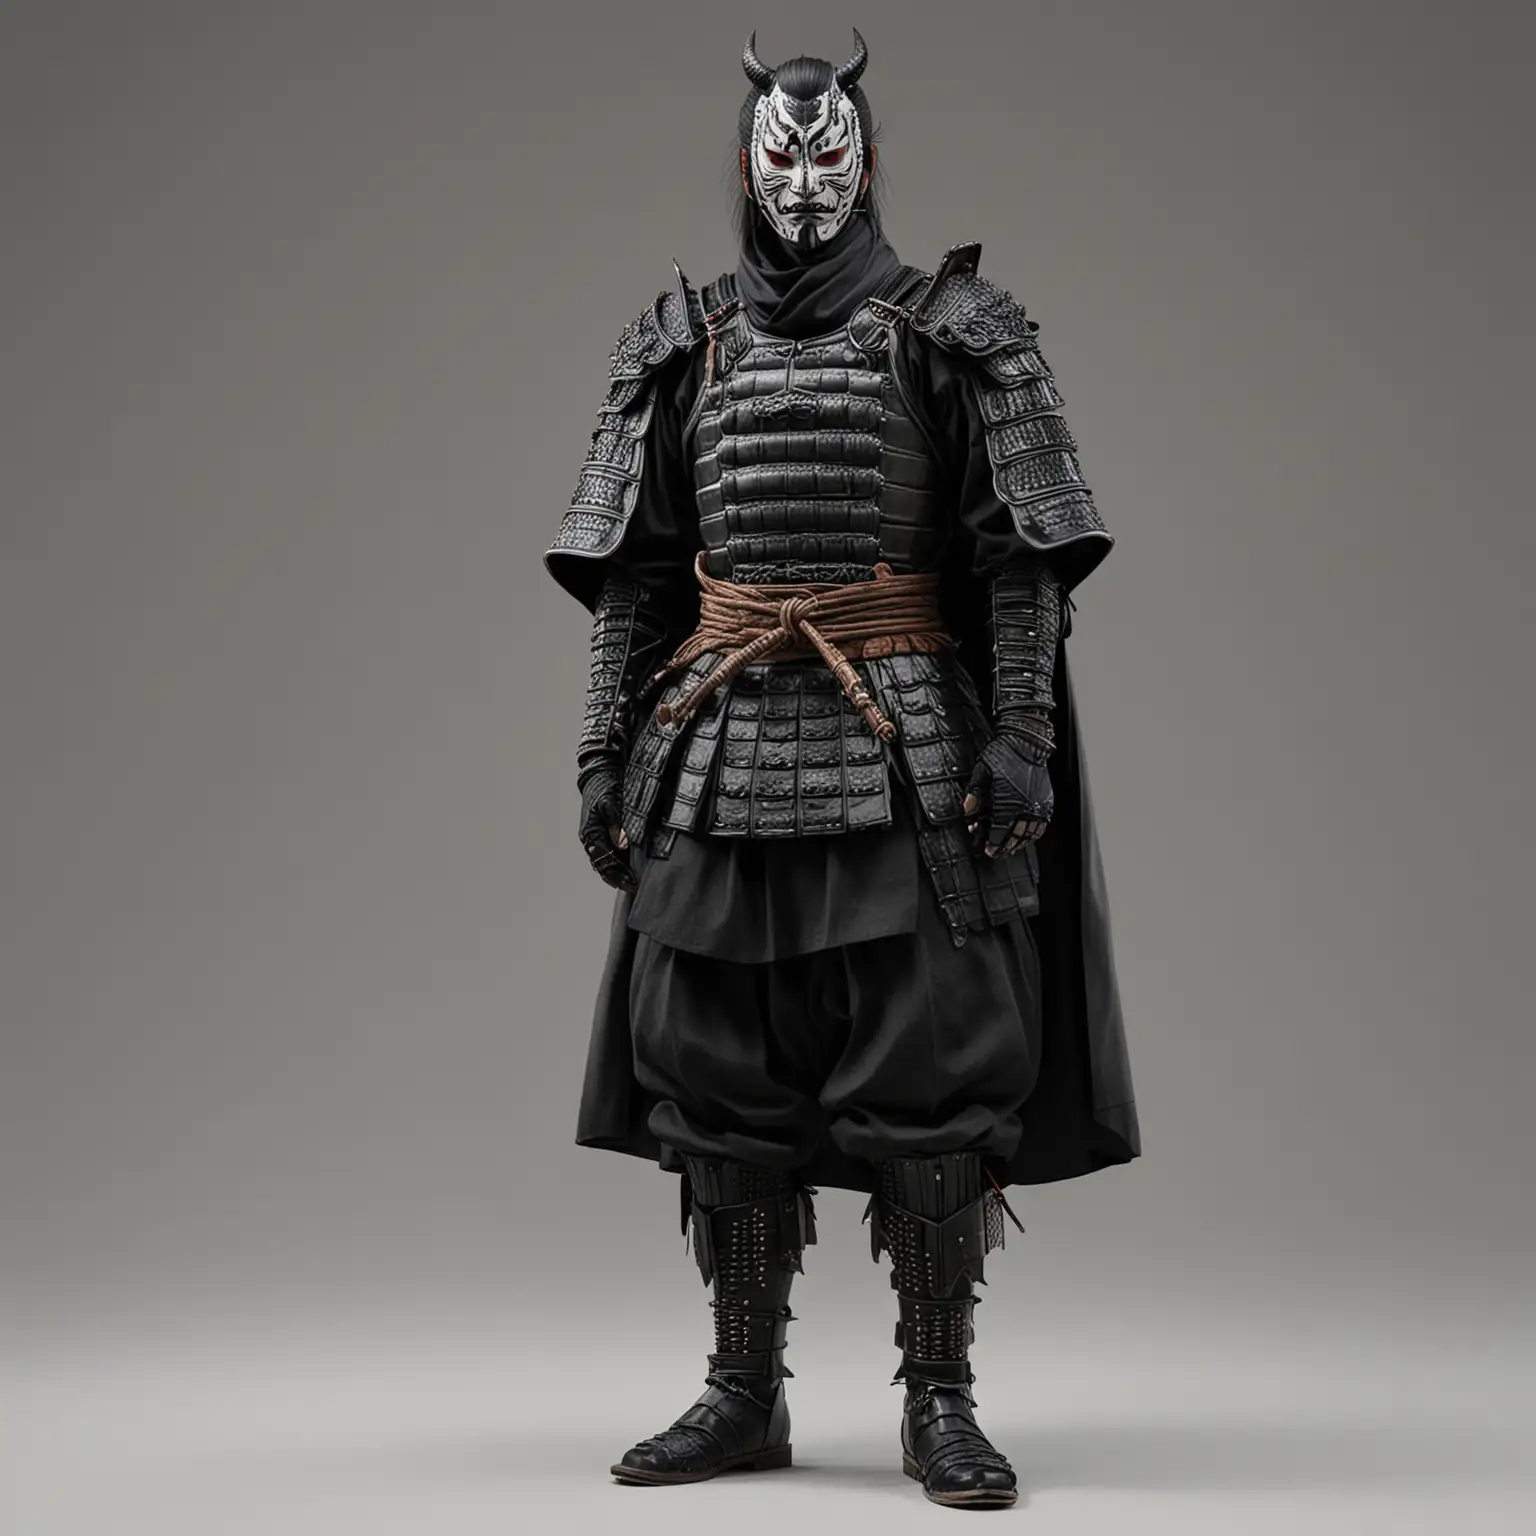 Heroic Samurai Warrior in Black Armor on Bright White Background